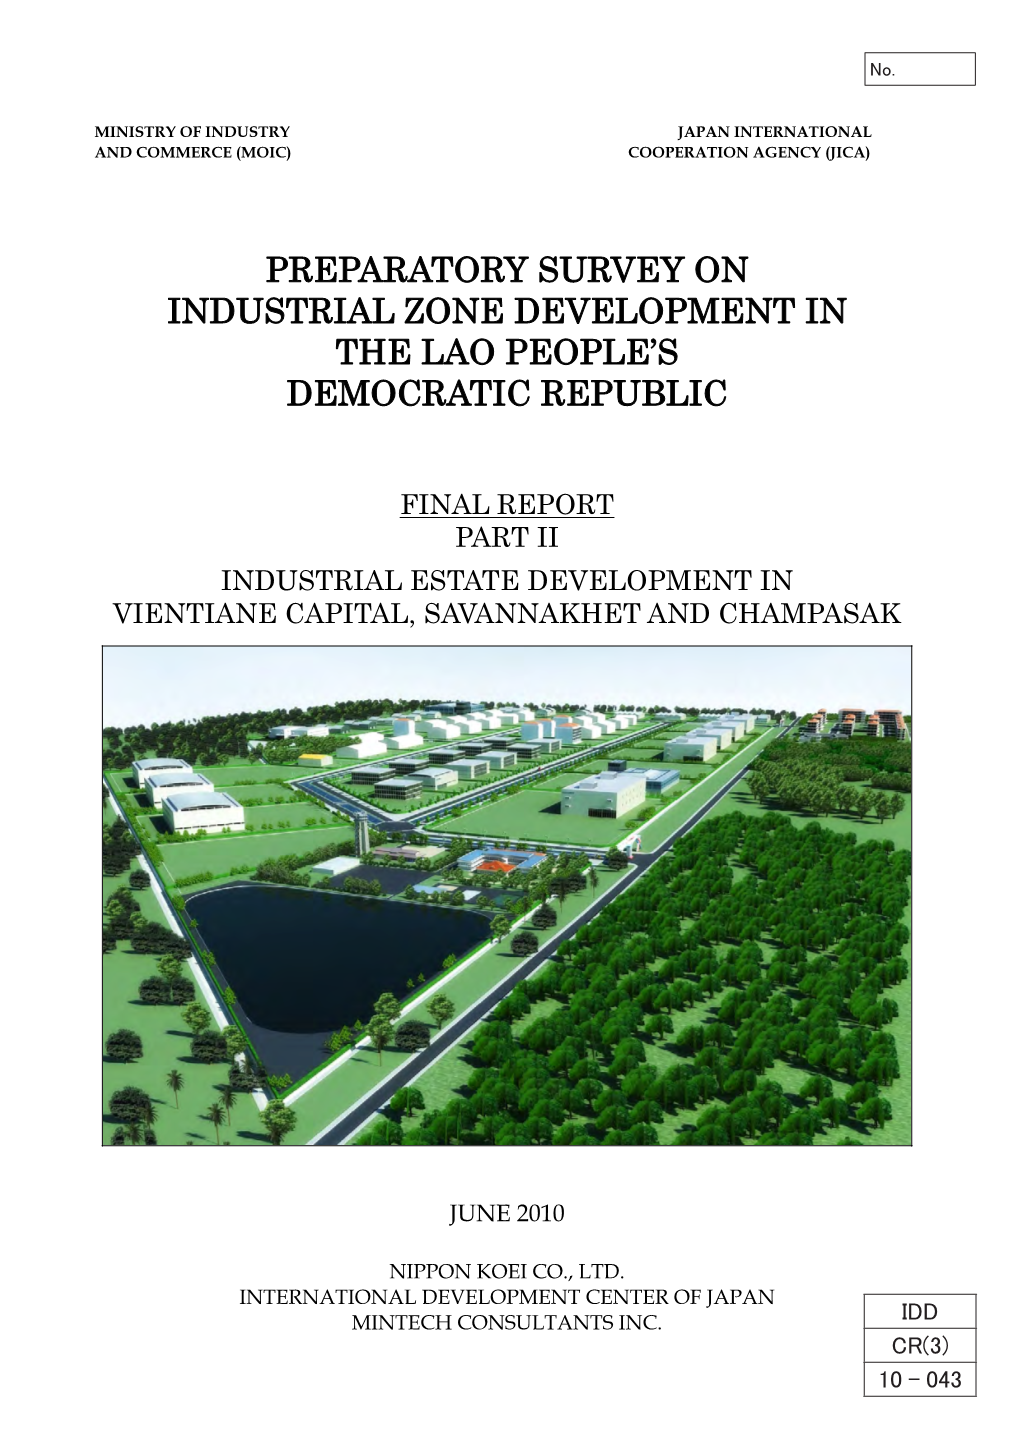 Preparatory Survey on Industrial Zone